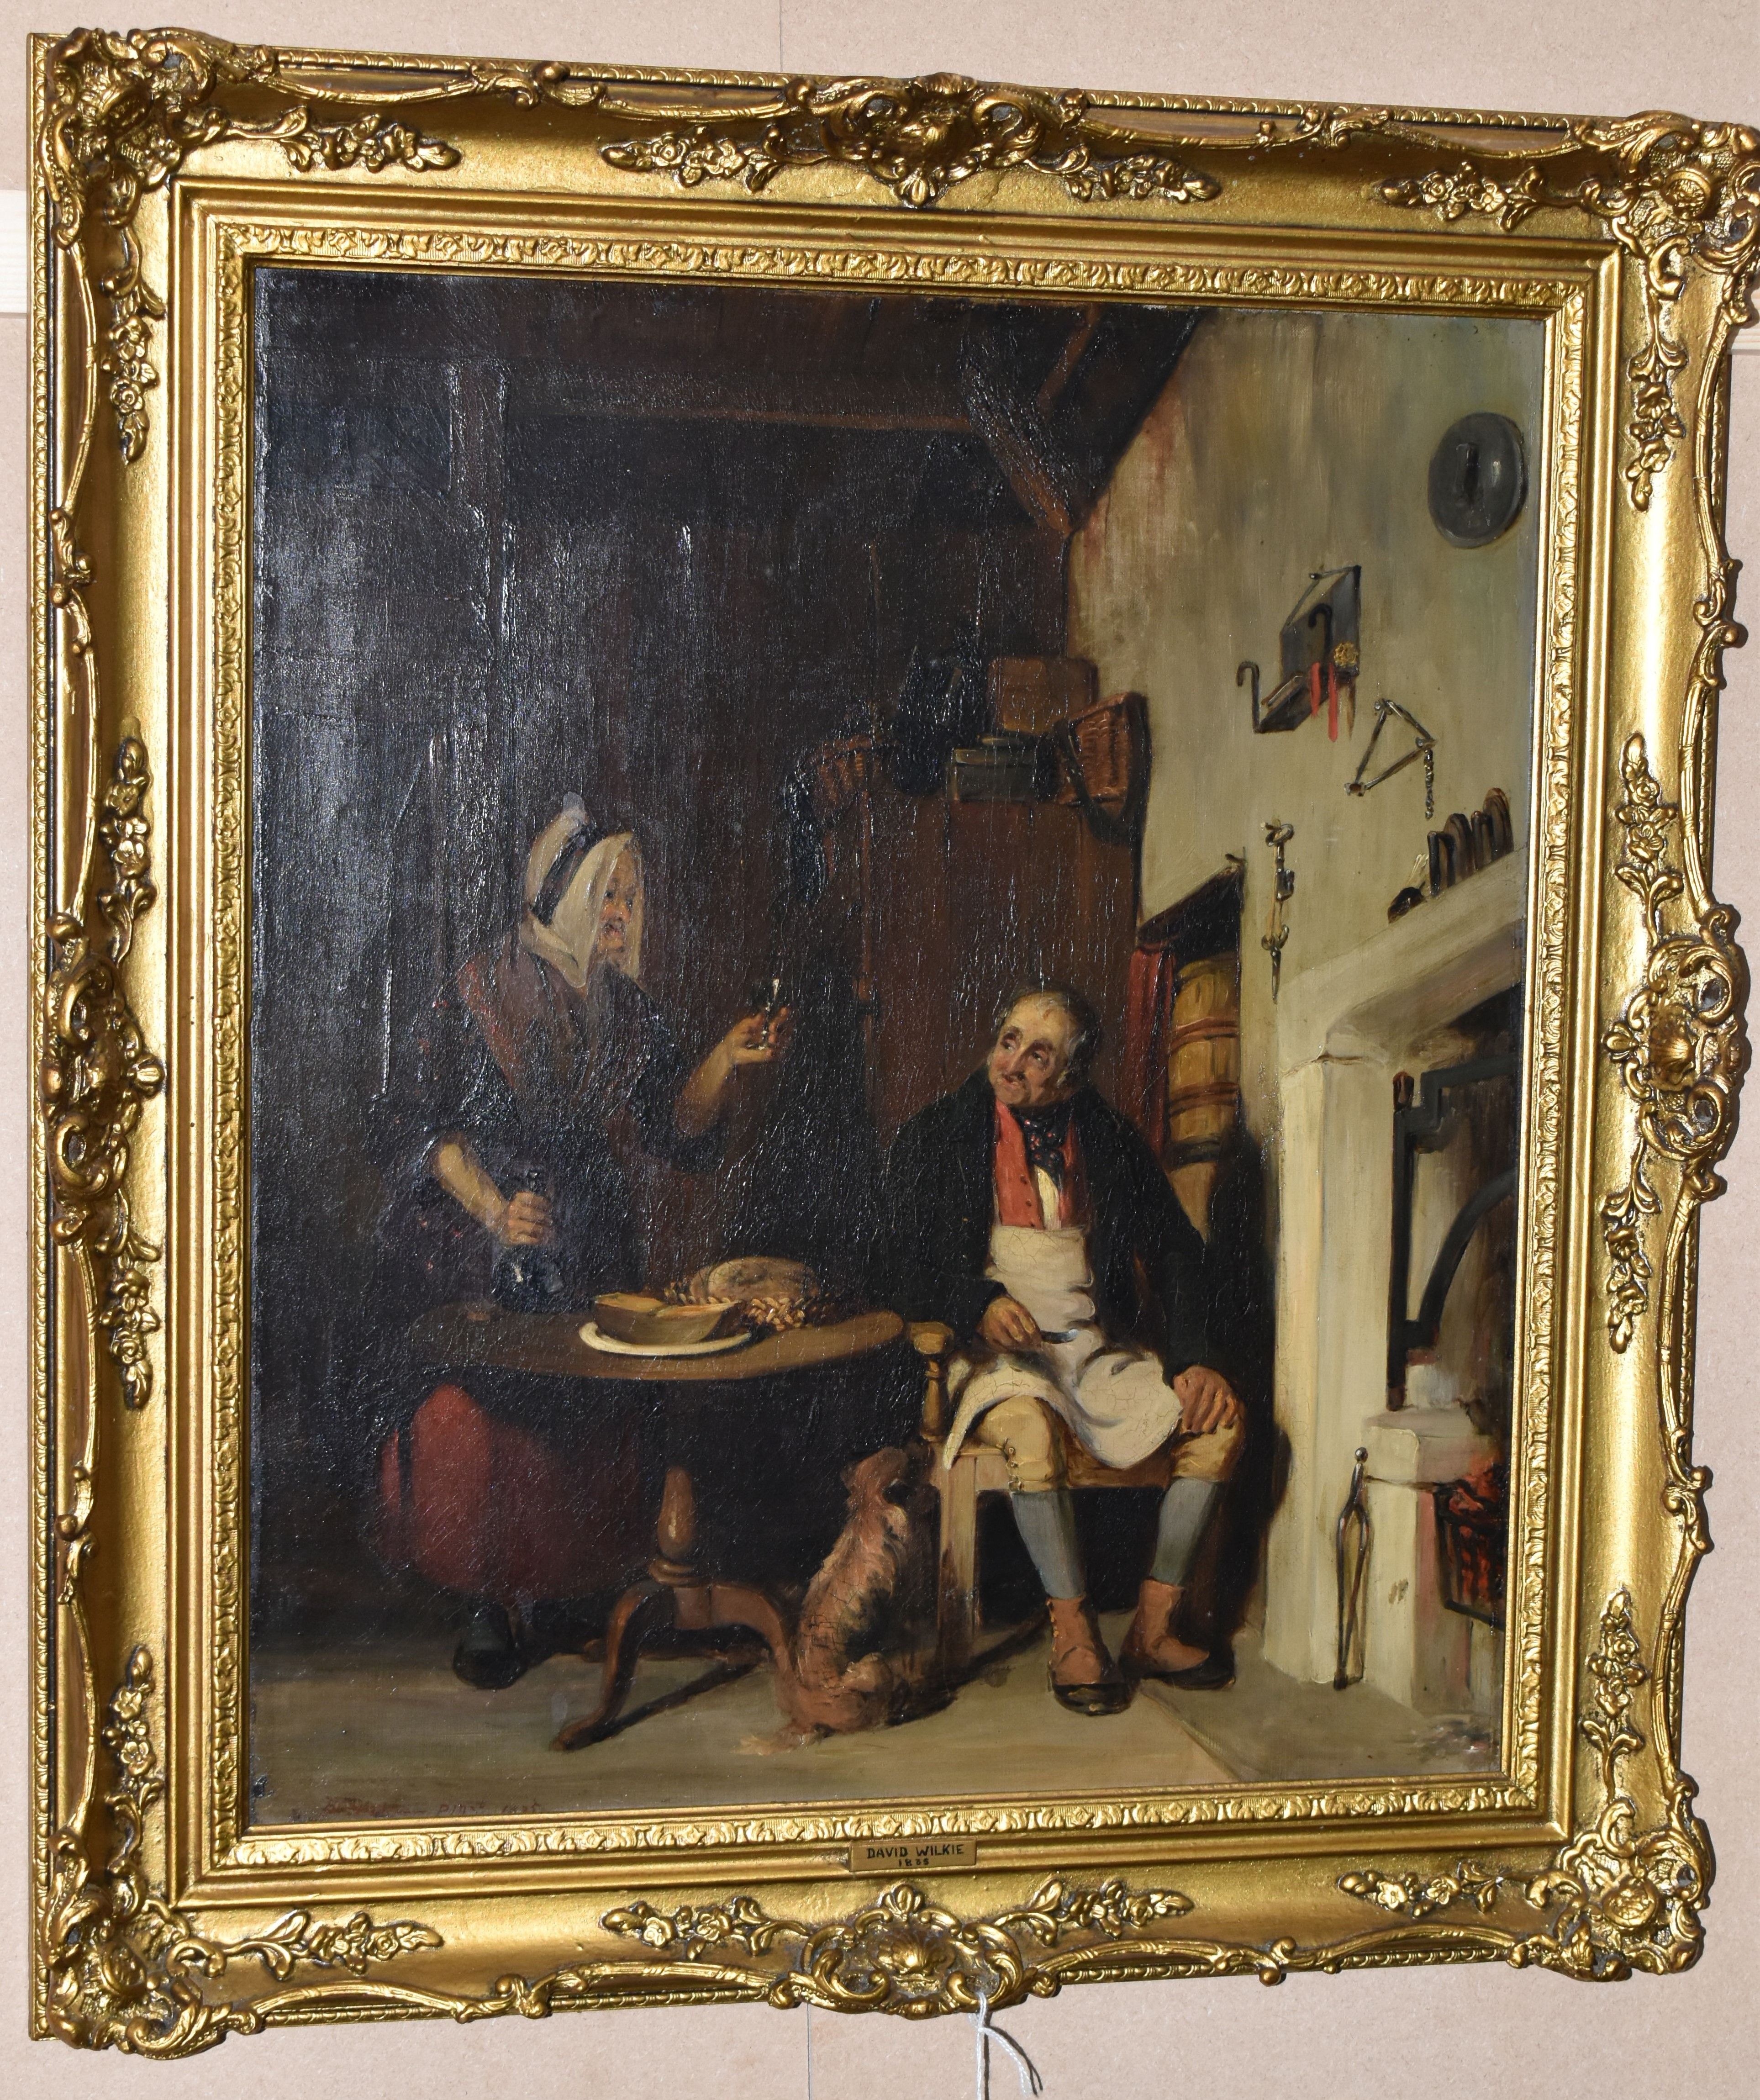 DAVID WILKIE (1785-1841) FIGURES IN AN INTERIOR SCENE, an elderly Gentleman is seated beside a